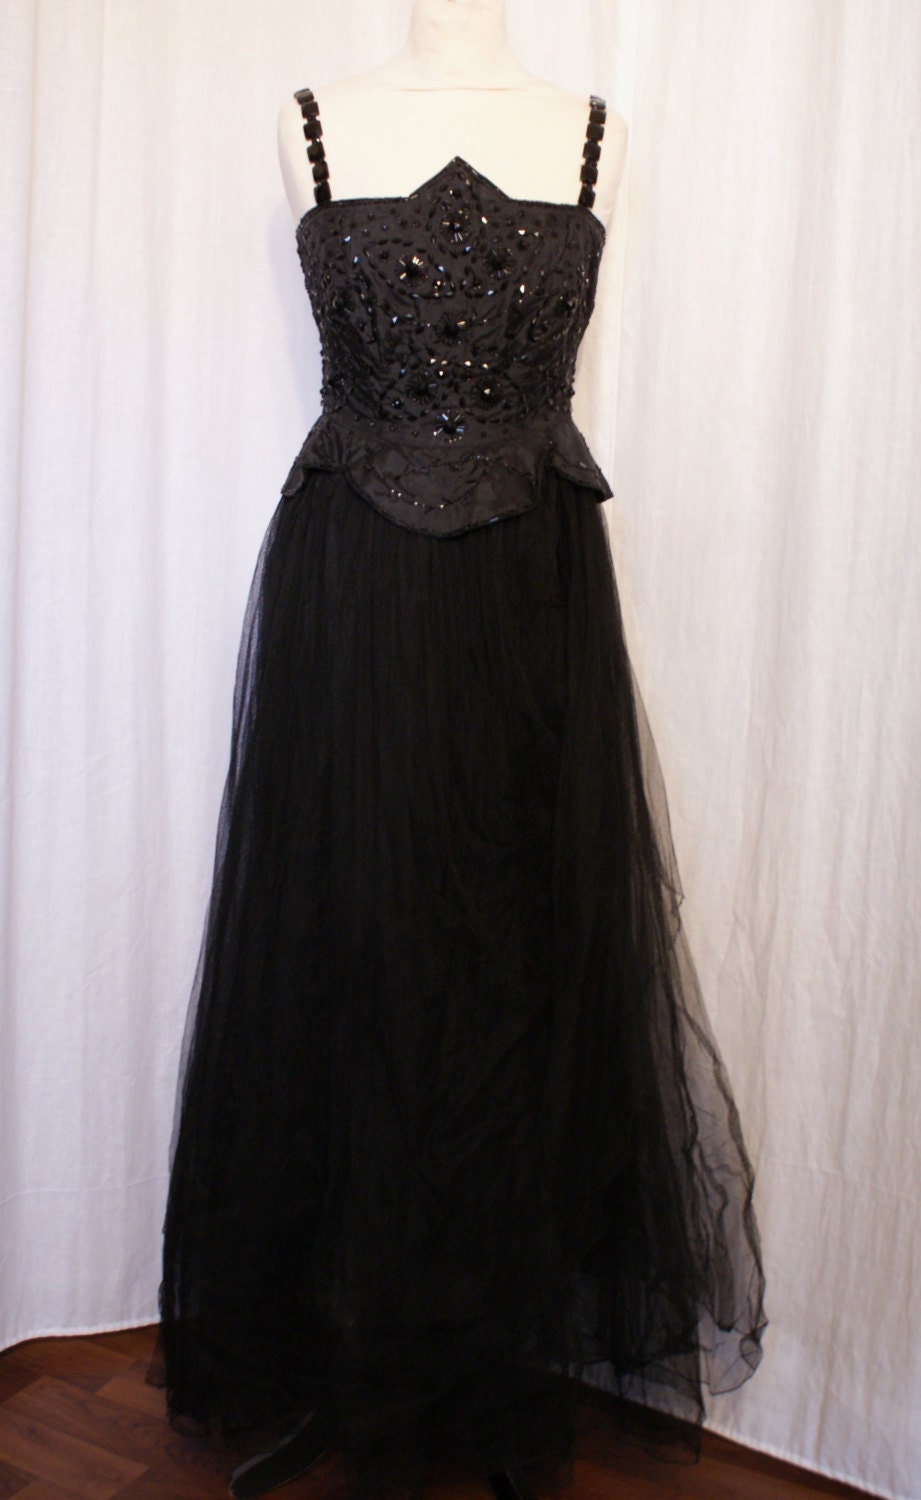 Vintage 1940s full length beaded ball gown evening dress black